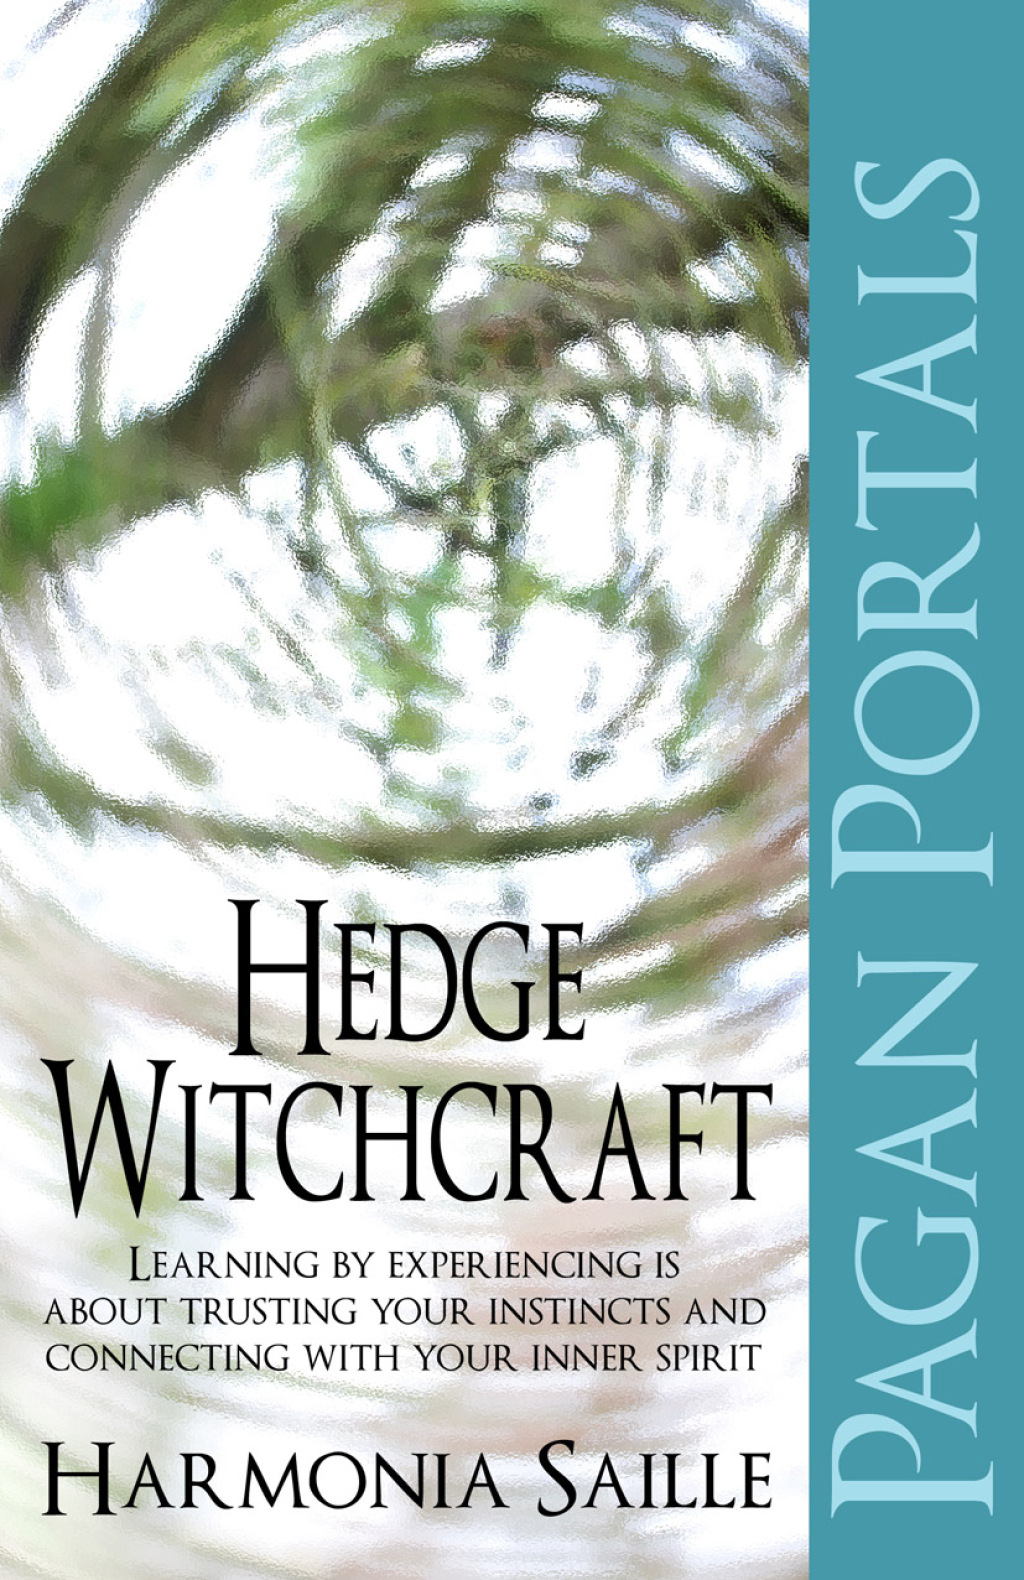 Pagan Portals - Hedge Witchcraft (eBook) - Harmonia Saille,